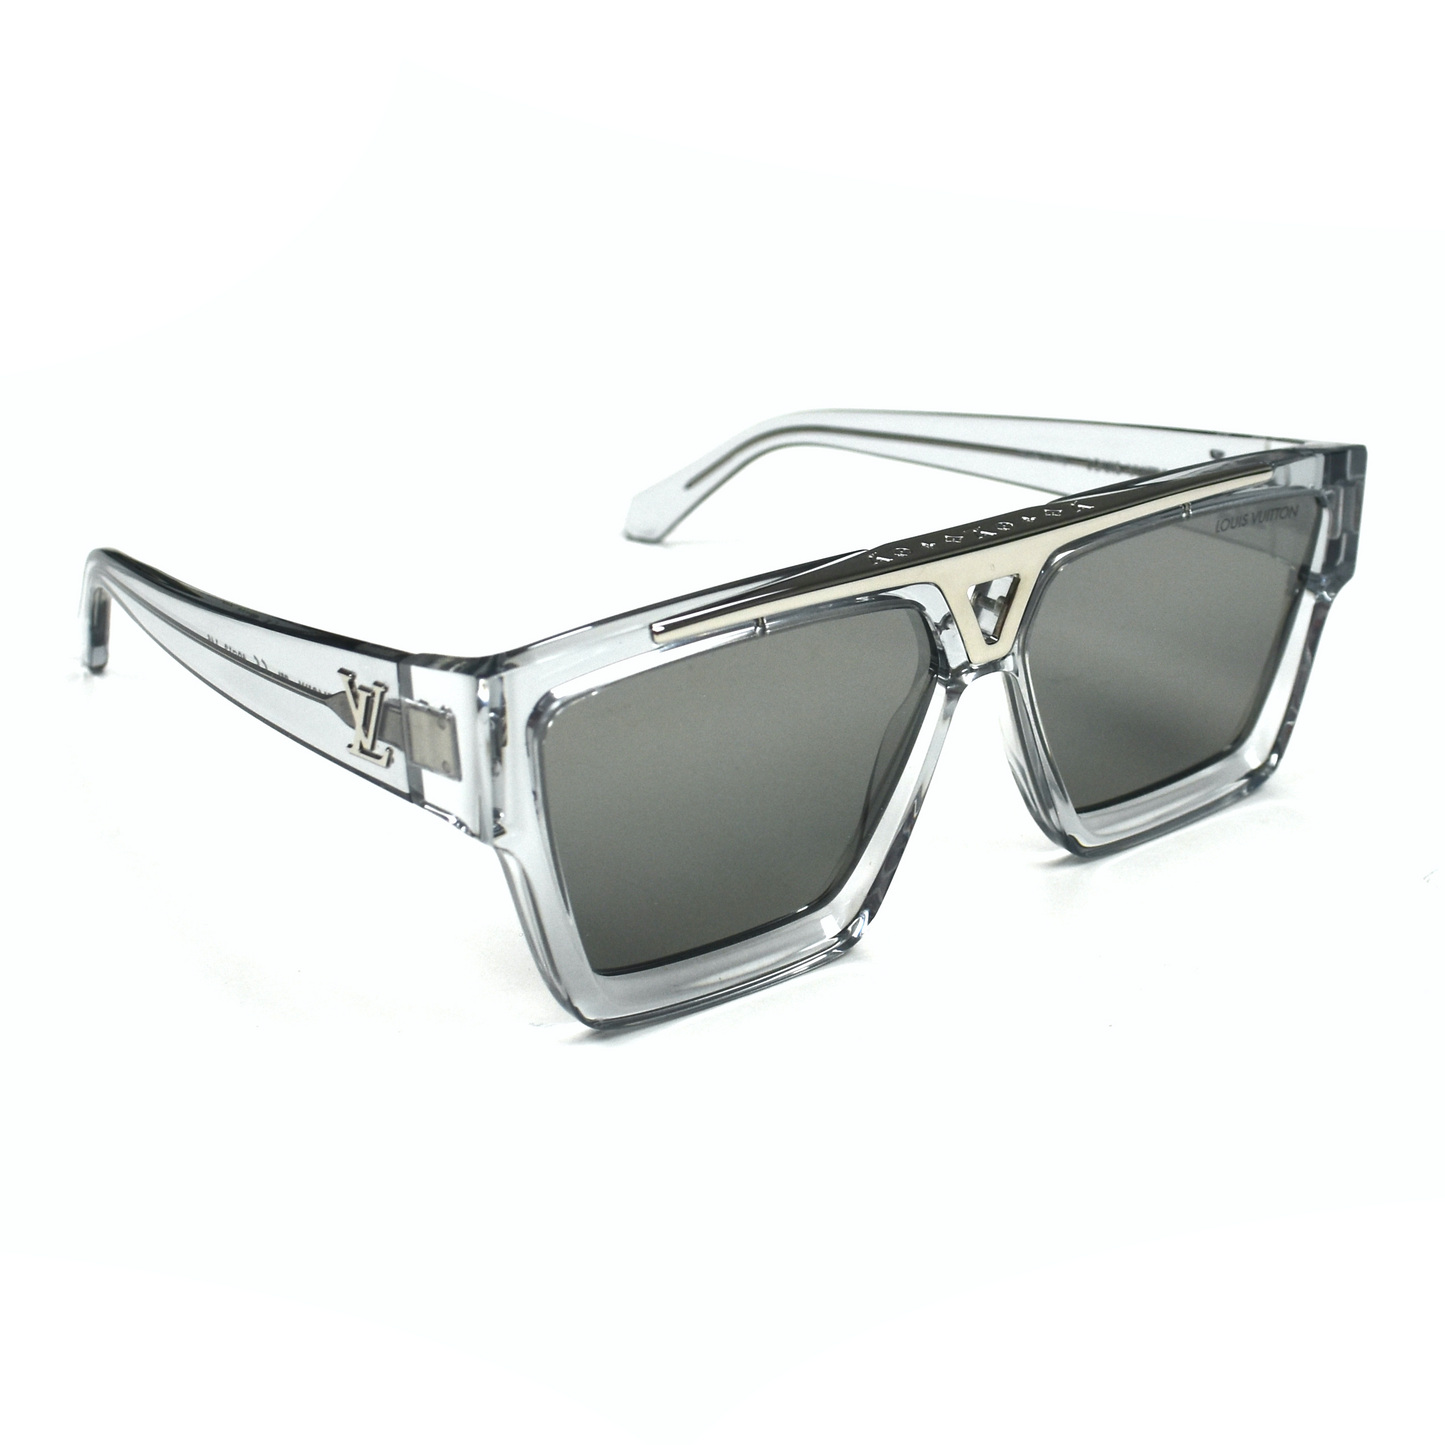 Louis Vuitton 1.1 Evidence Sunglasses Black Acetate & Metal. Size W